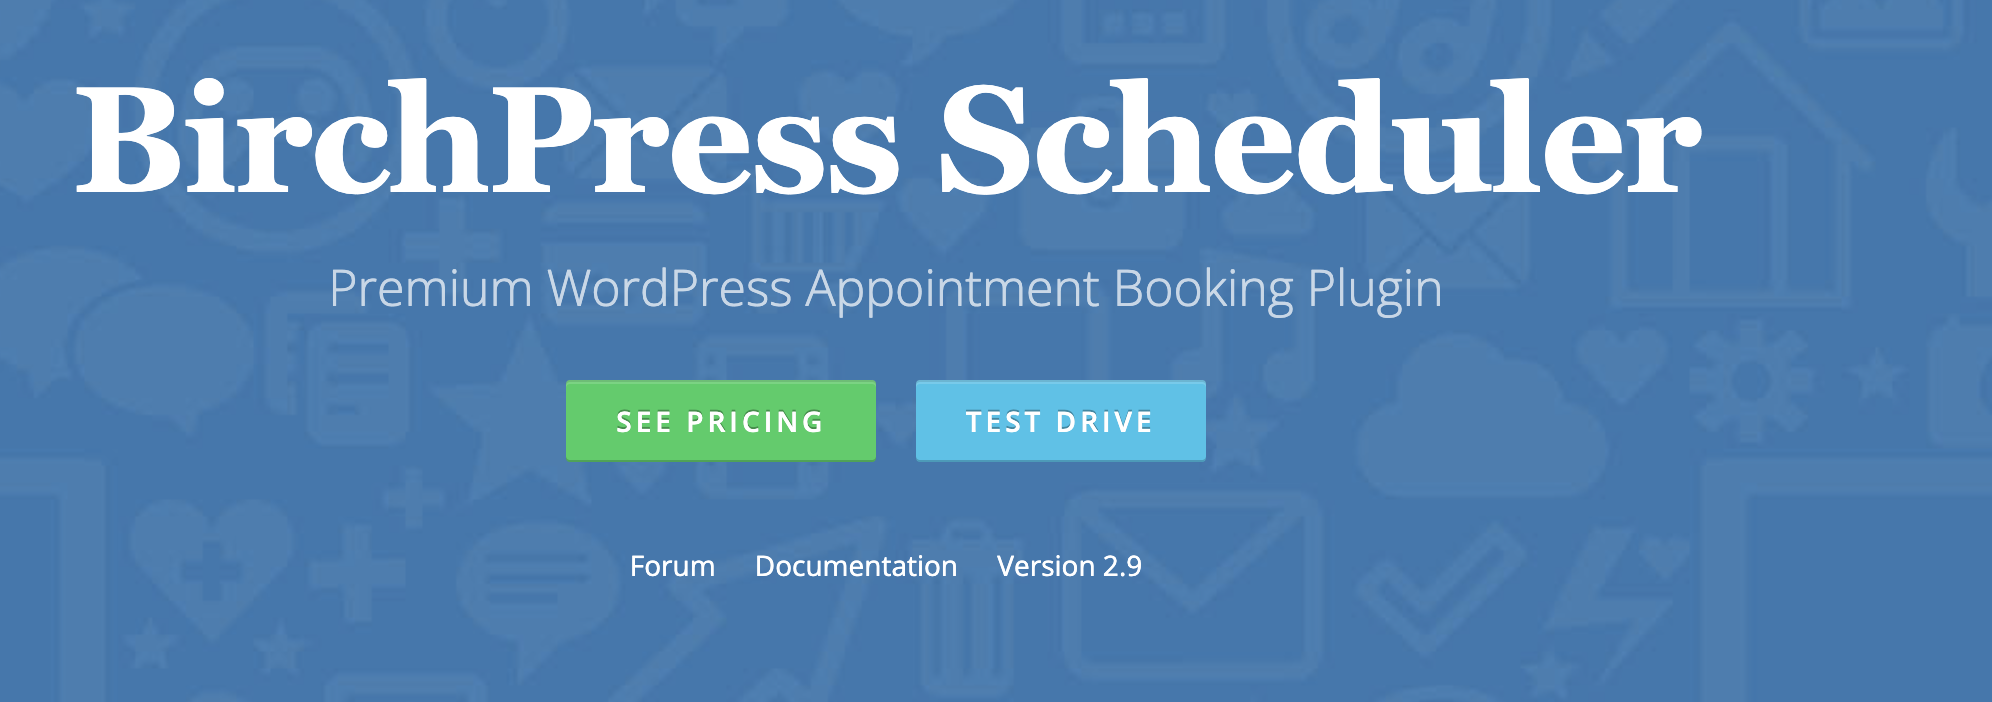 BirchPress Scheduler homepage screenshot